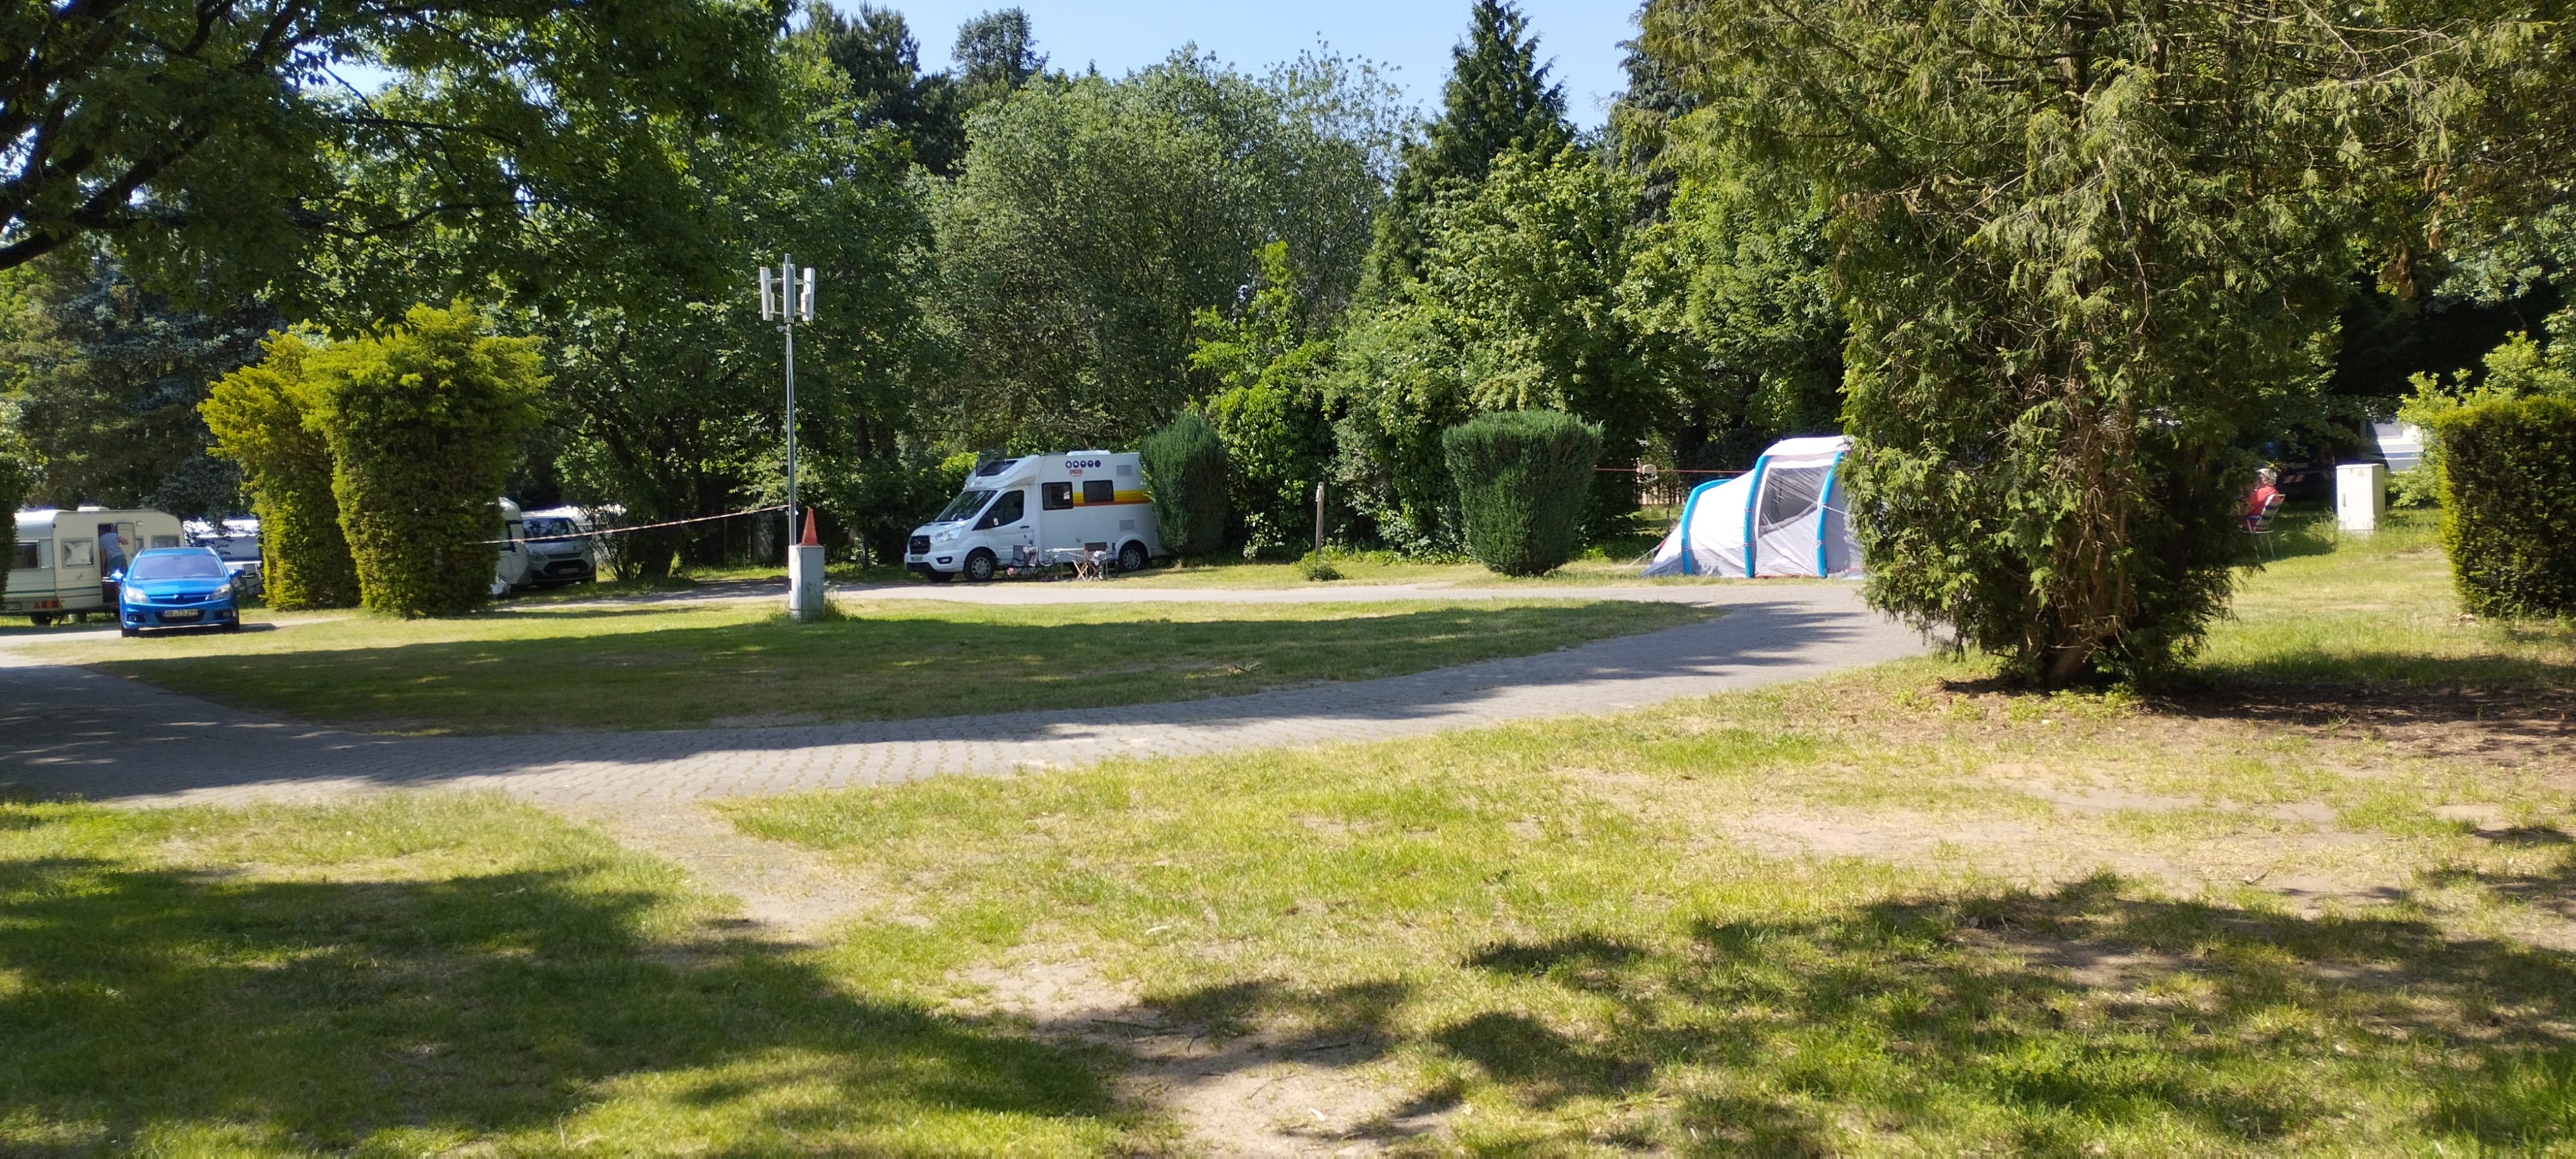 Campingplatz Dreieich